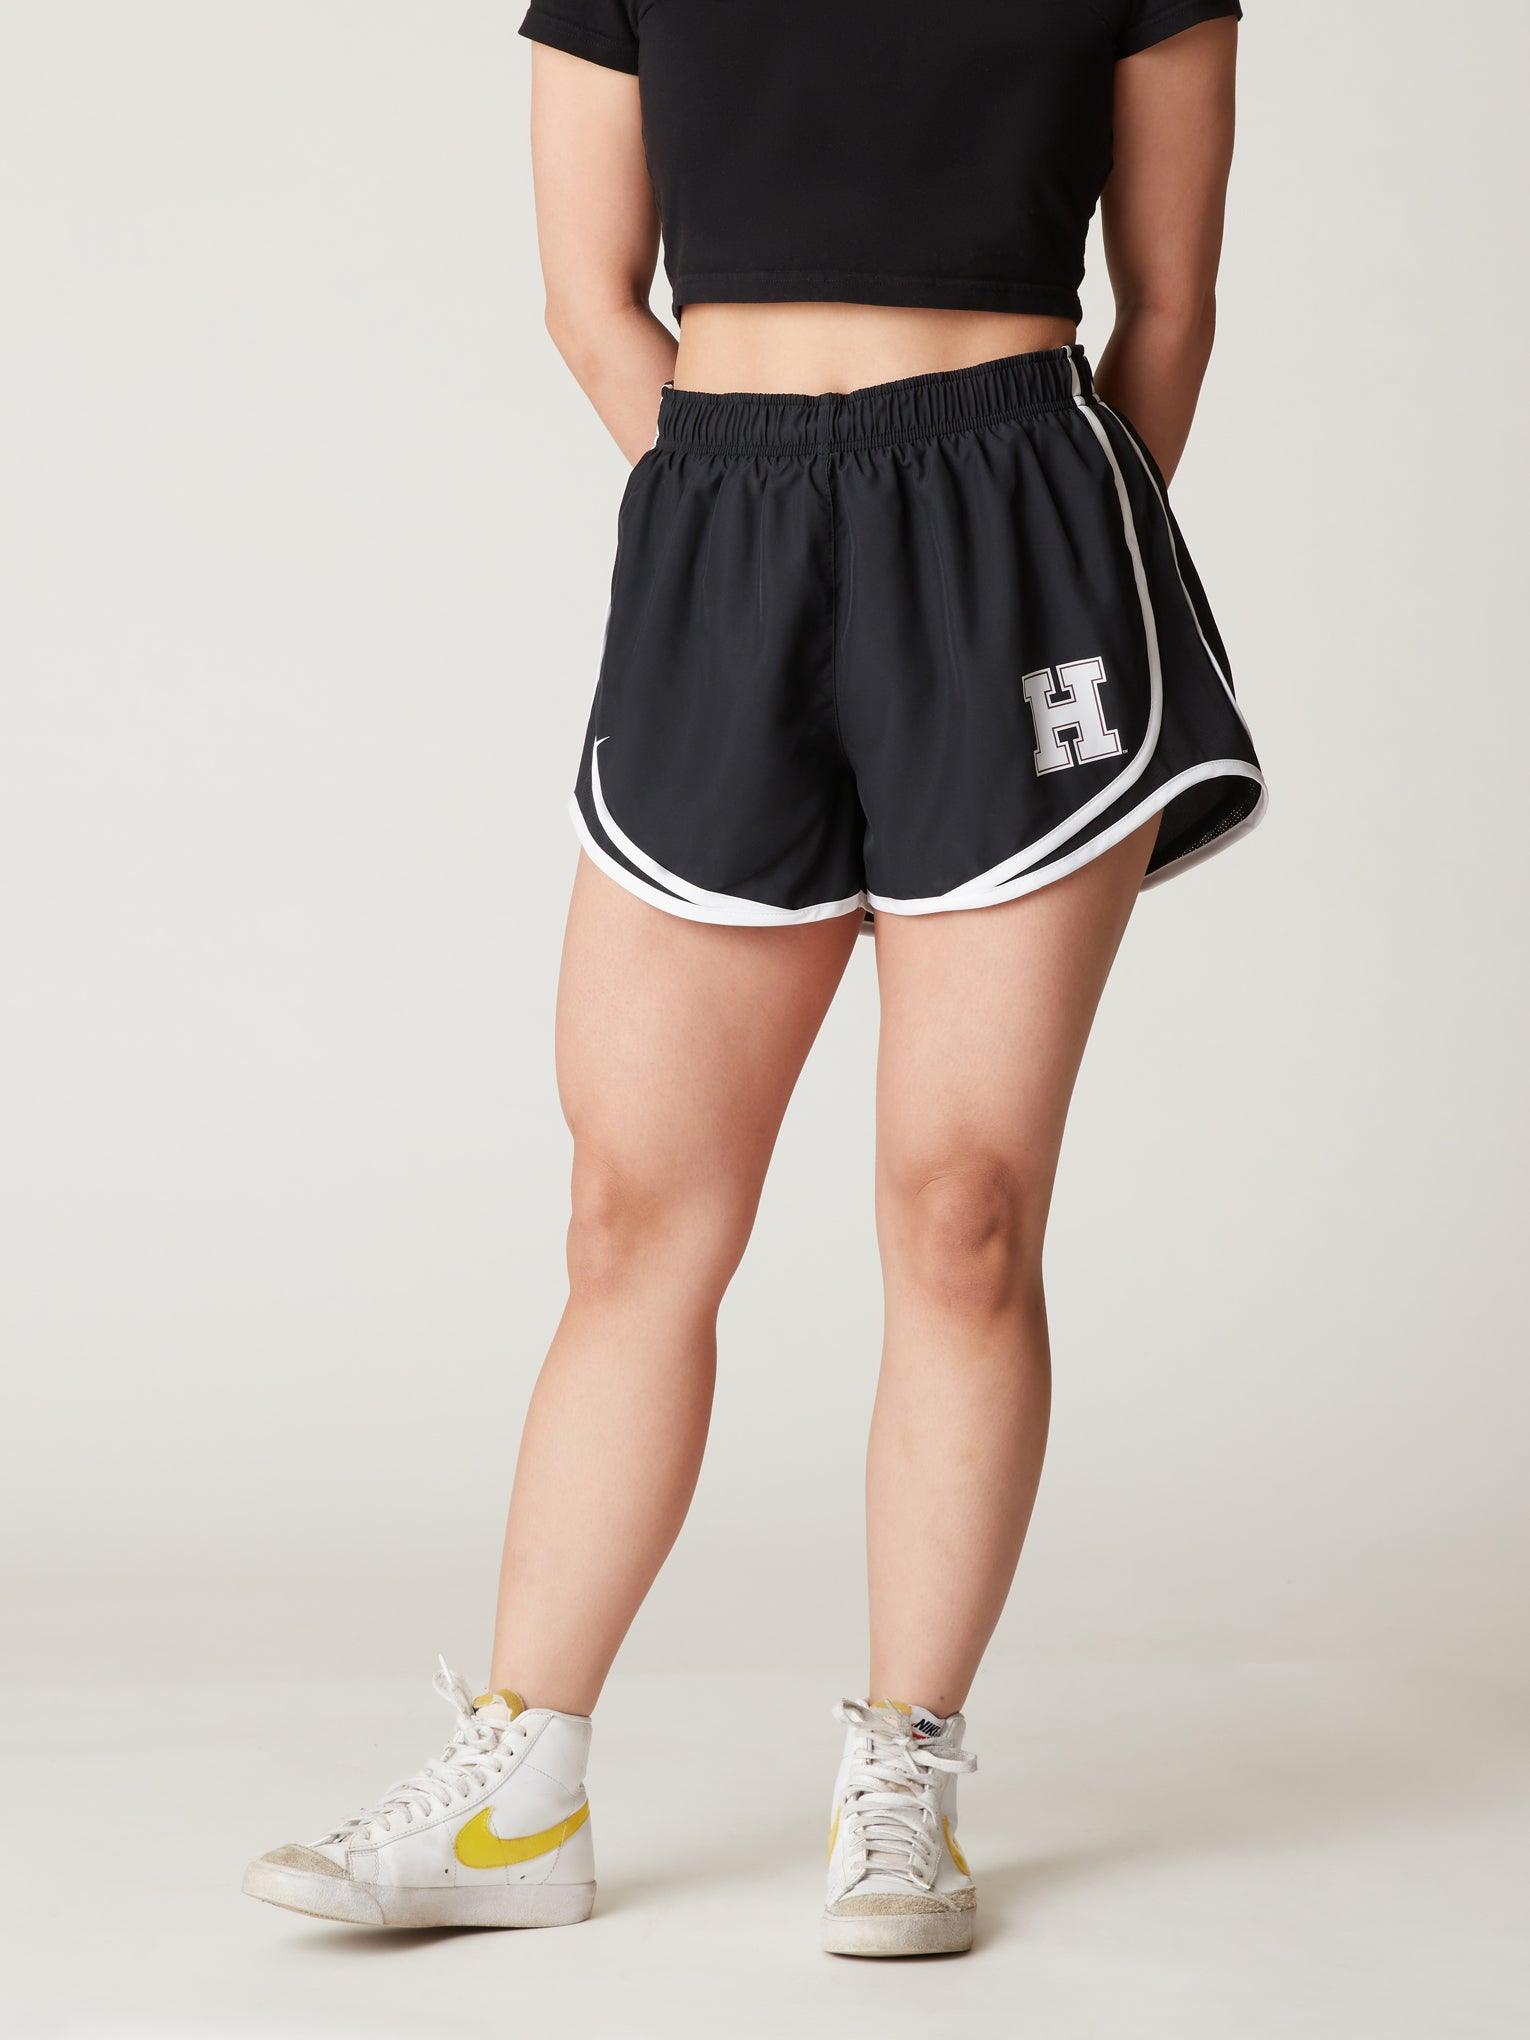 Harvard Nike Women's Shorts